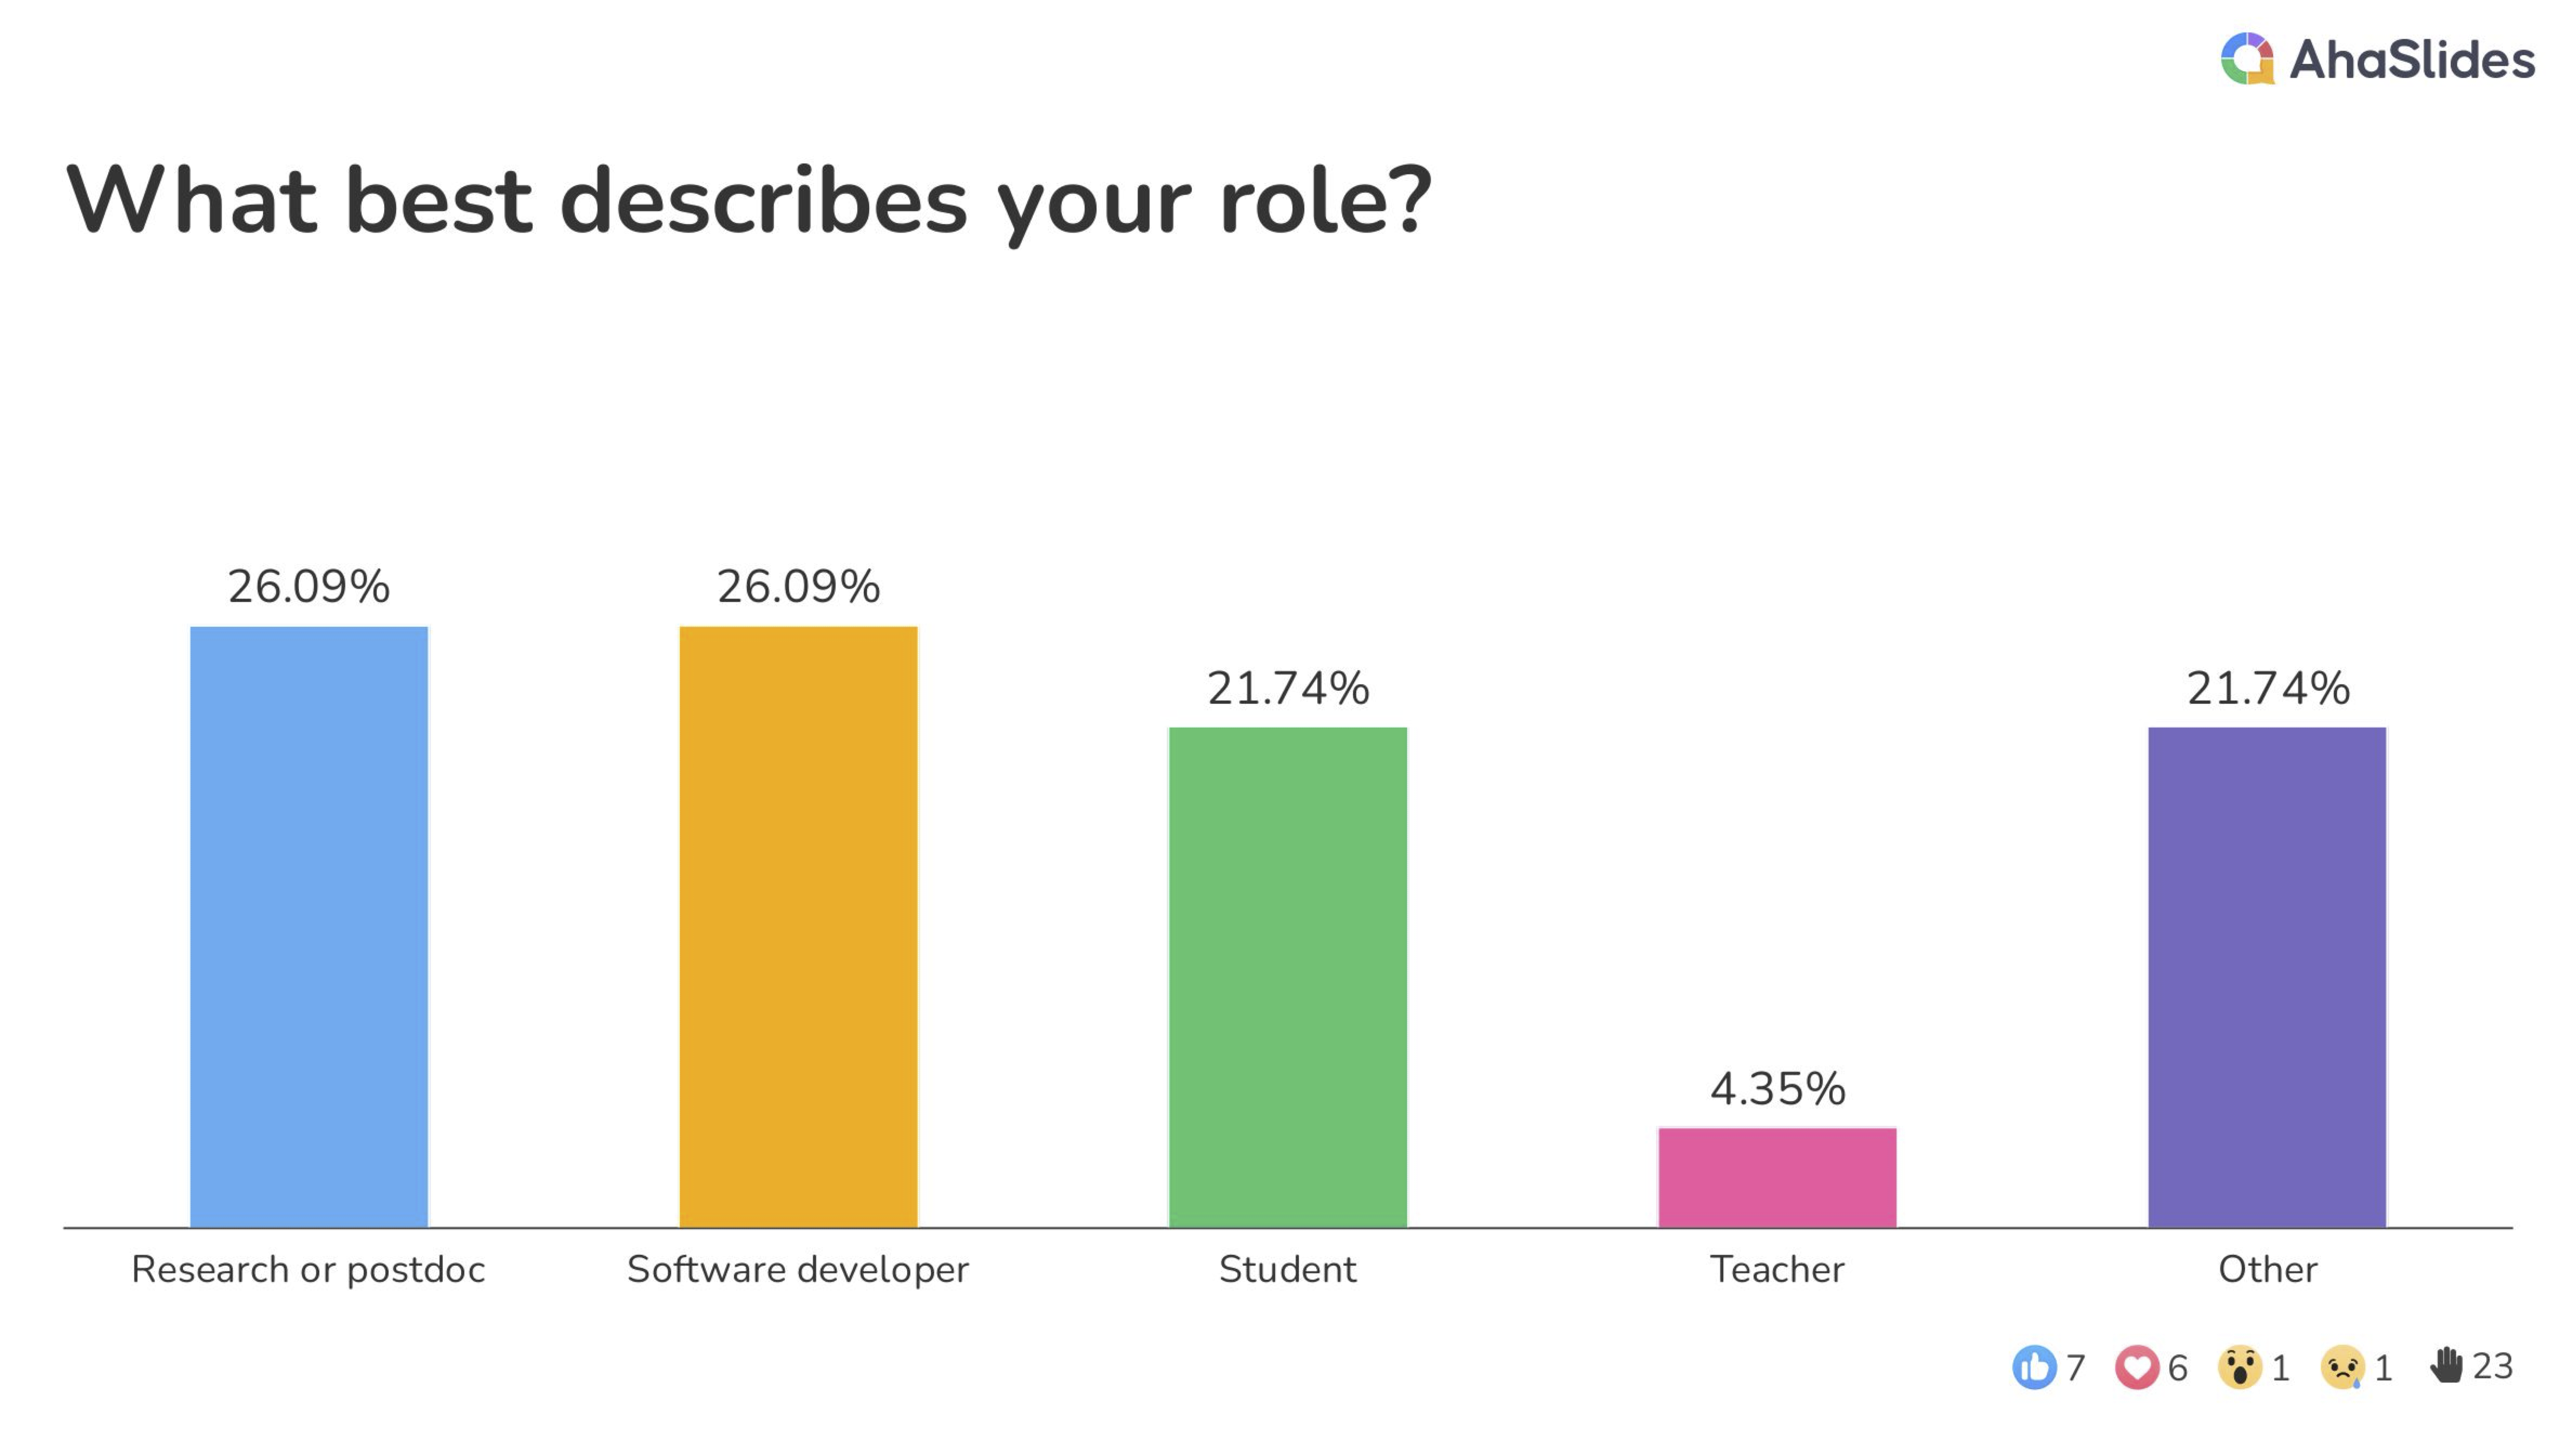 26% researcher or postdoc, 26% software developer, 22% students, 5% teachers, and 22% something else